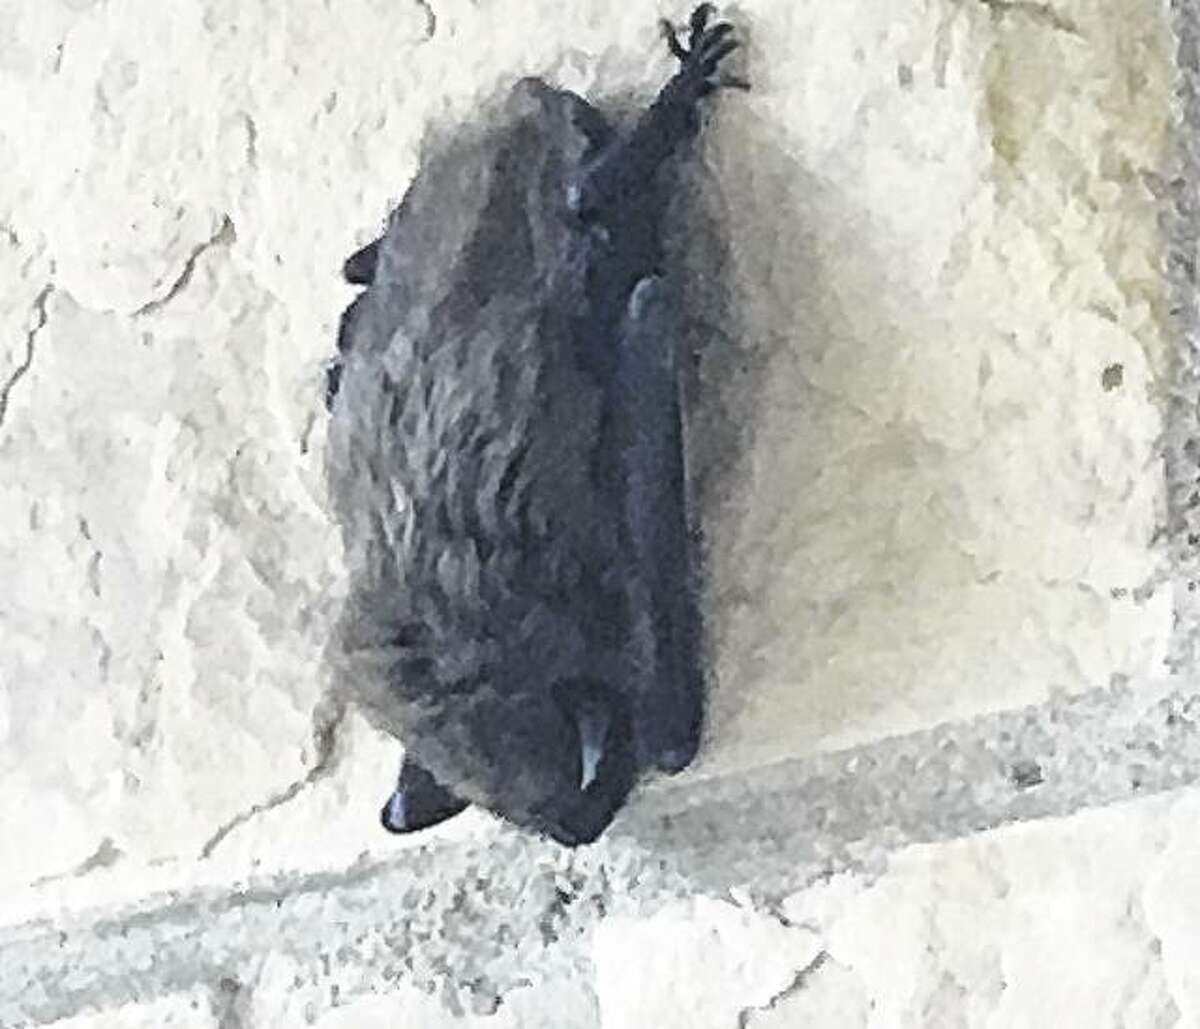 A bat rests in a hallway at First Presbyterian Church.